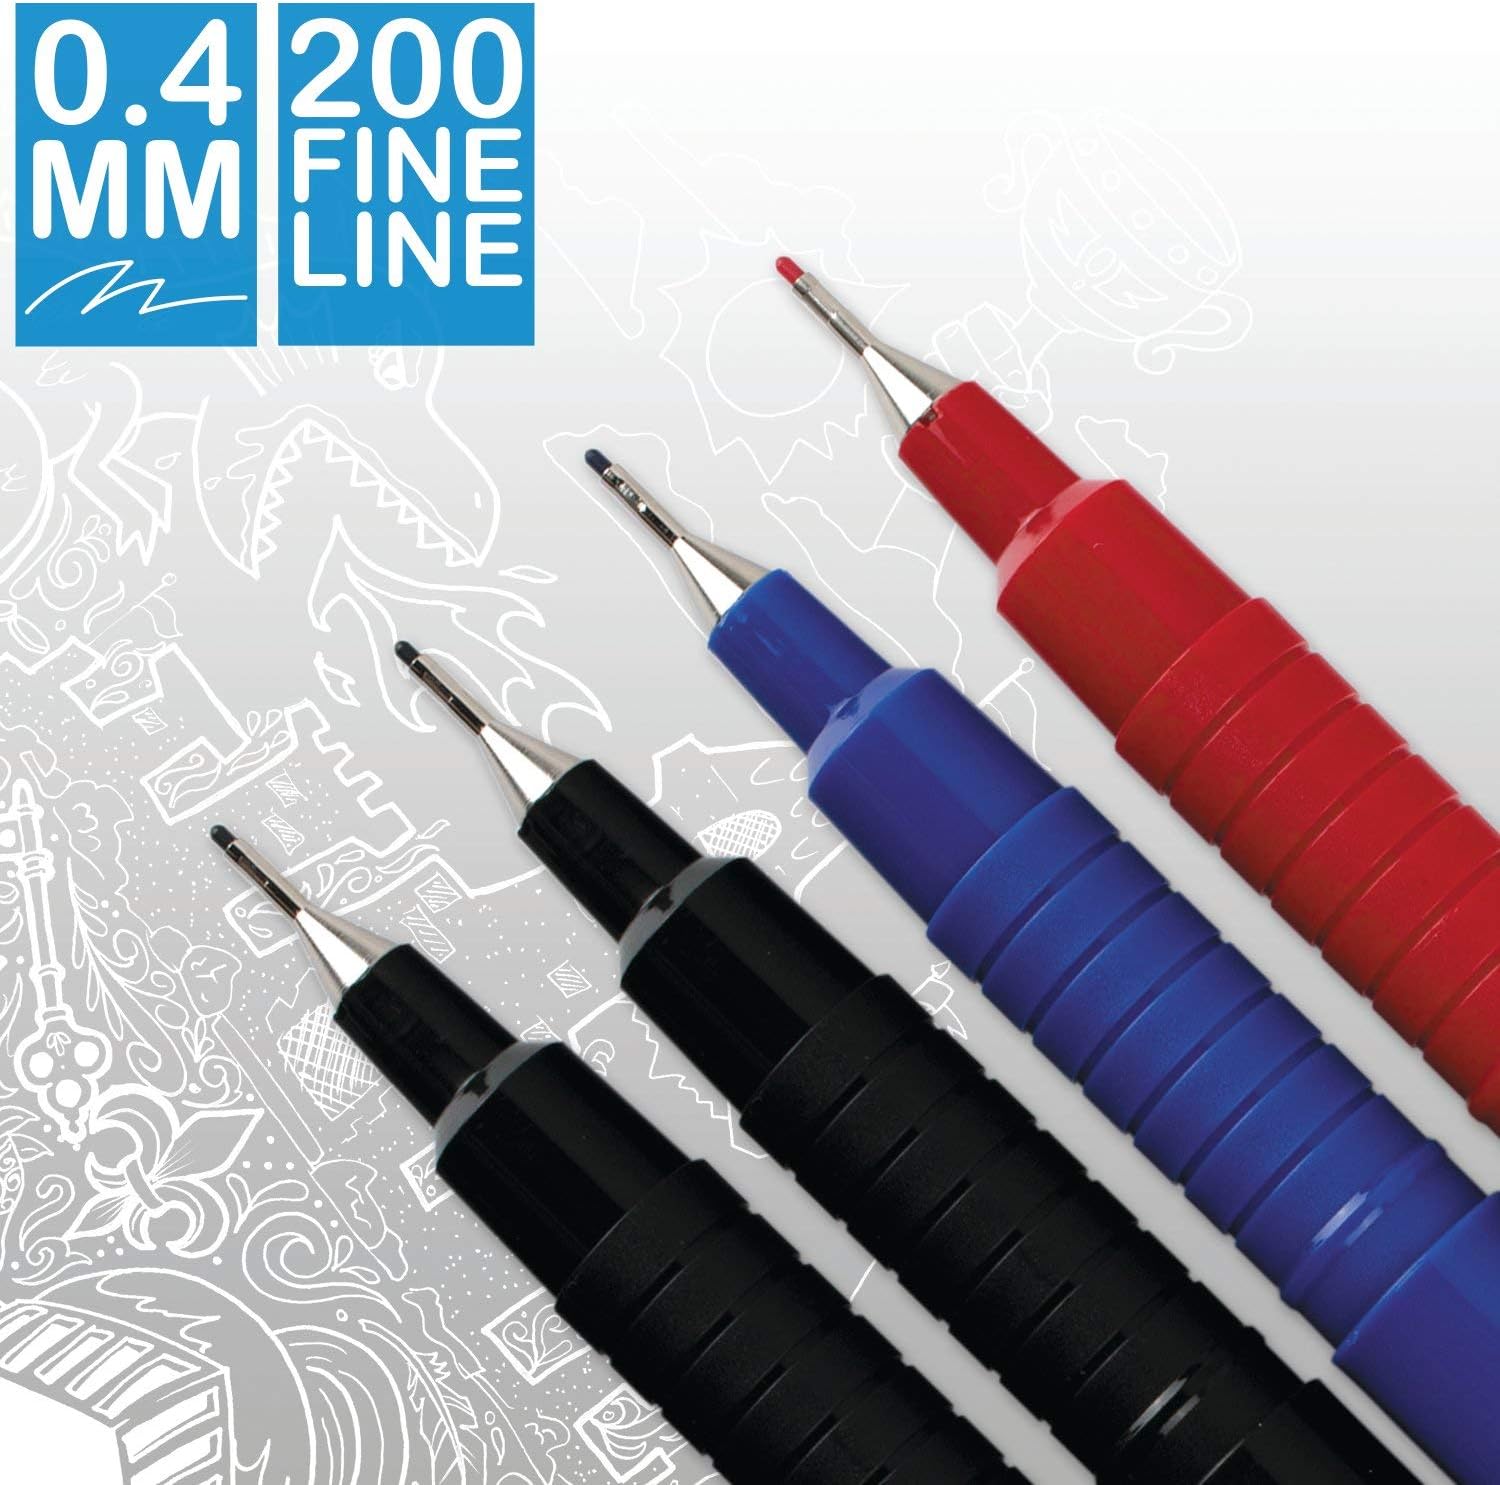 Artline 200 Fineliner Writing Pens, 0.4mm Assorted Colors, 4 Pack